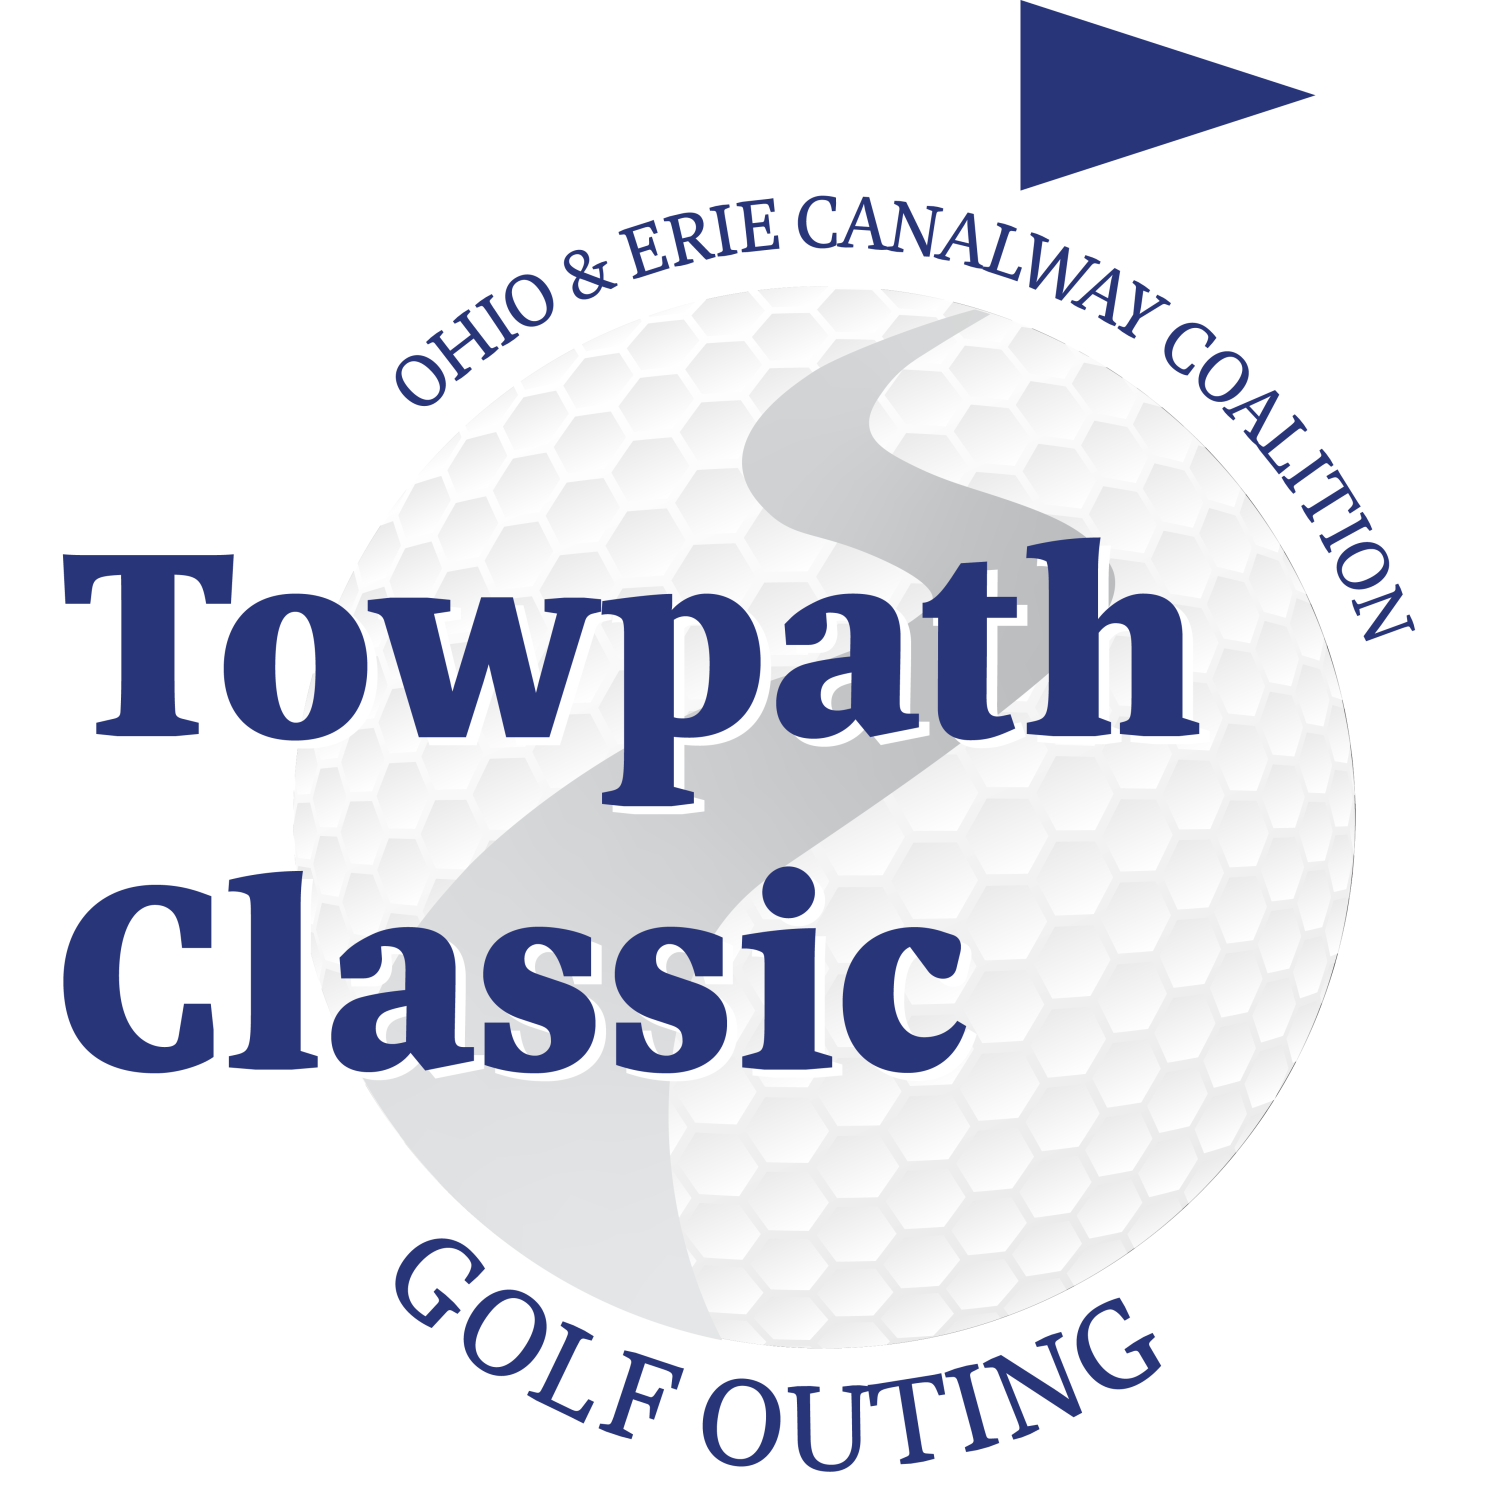 towpath classic logo